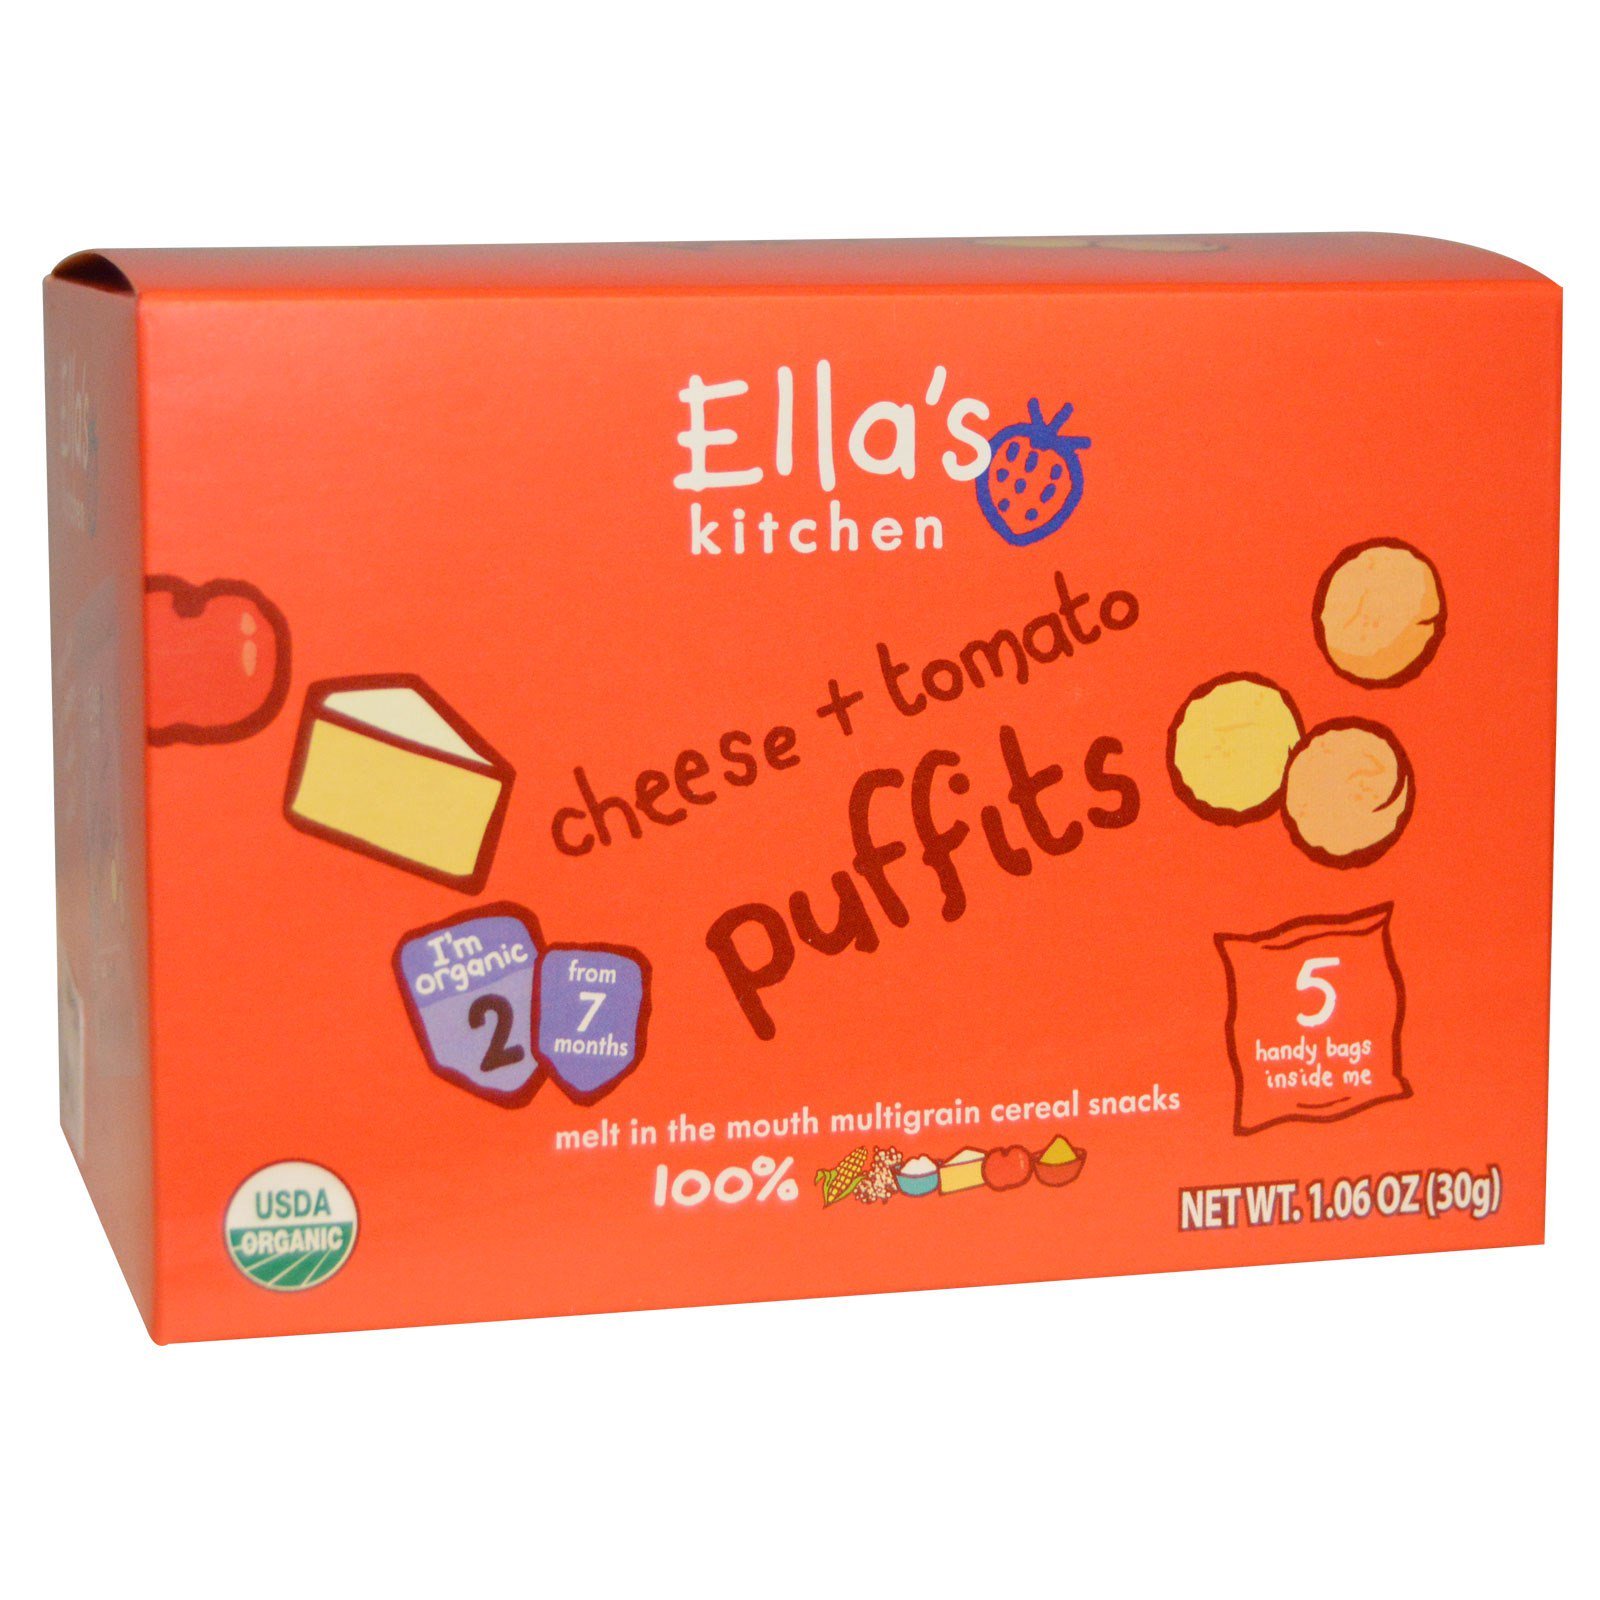 Ellas Kitchen Cheese Tomato Puffits 5 Handy Bags 106 Oz 30